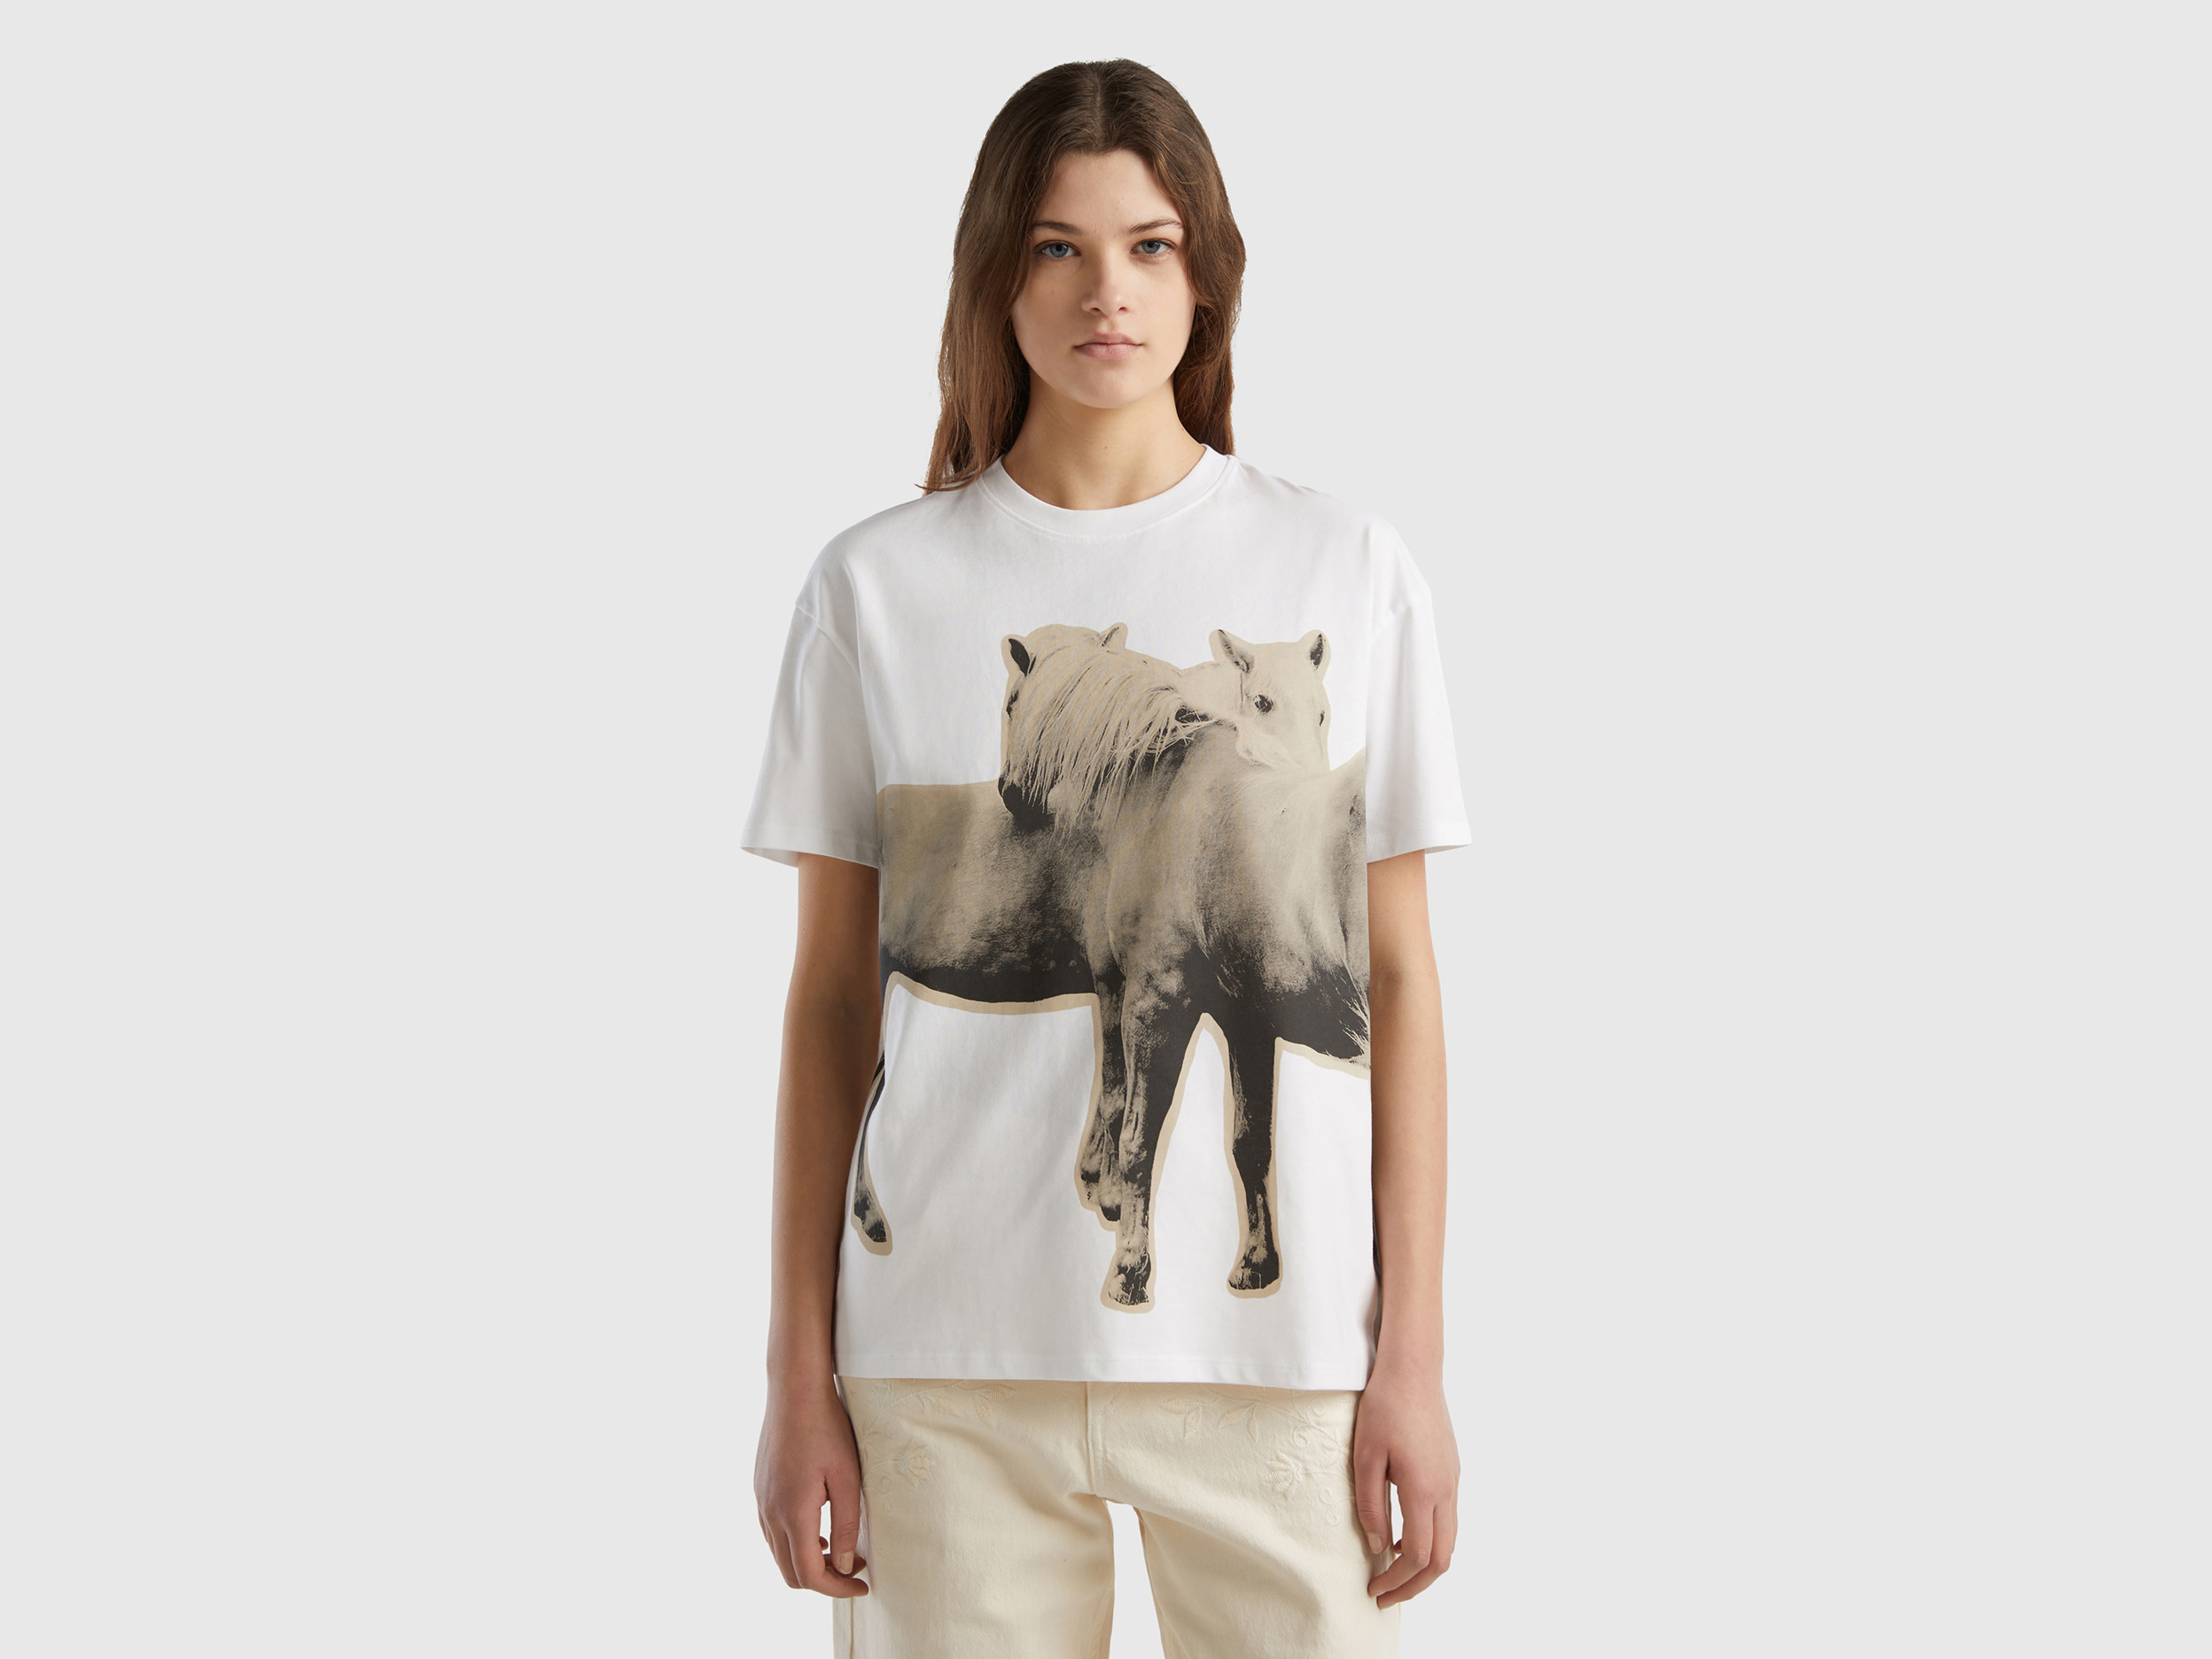 Benetton, Warm T-shirt With Horse Print, size S, White, Women